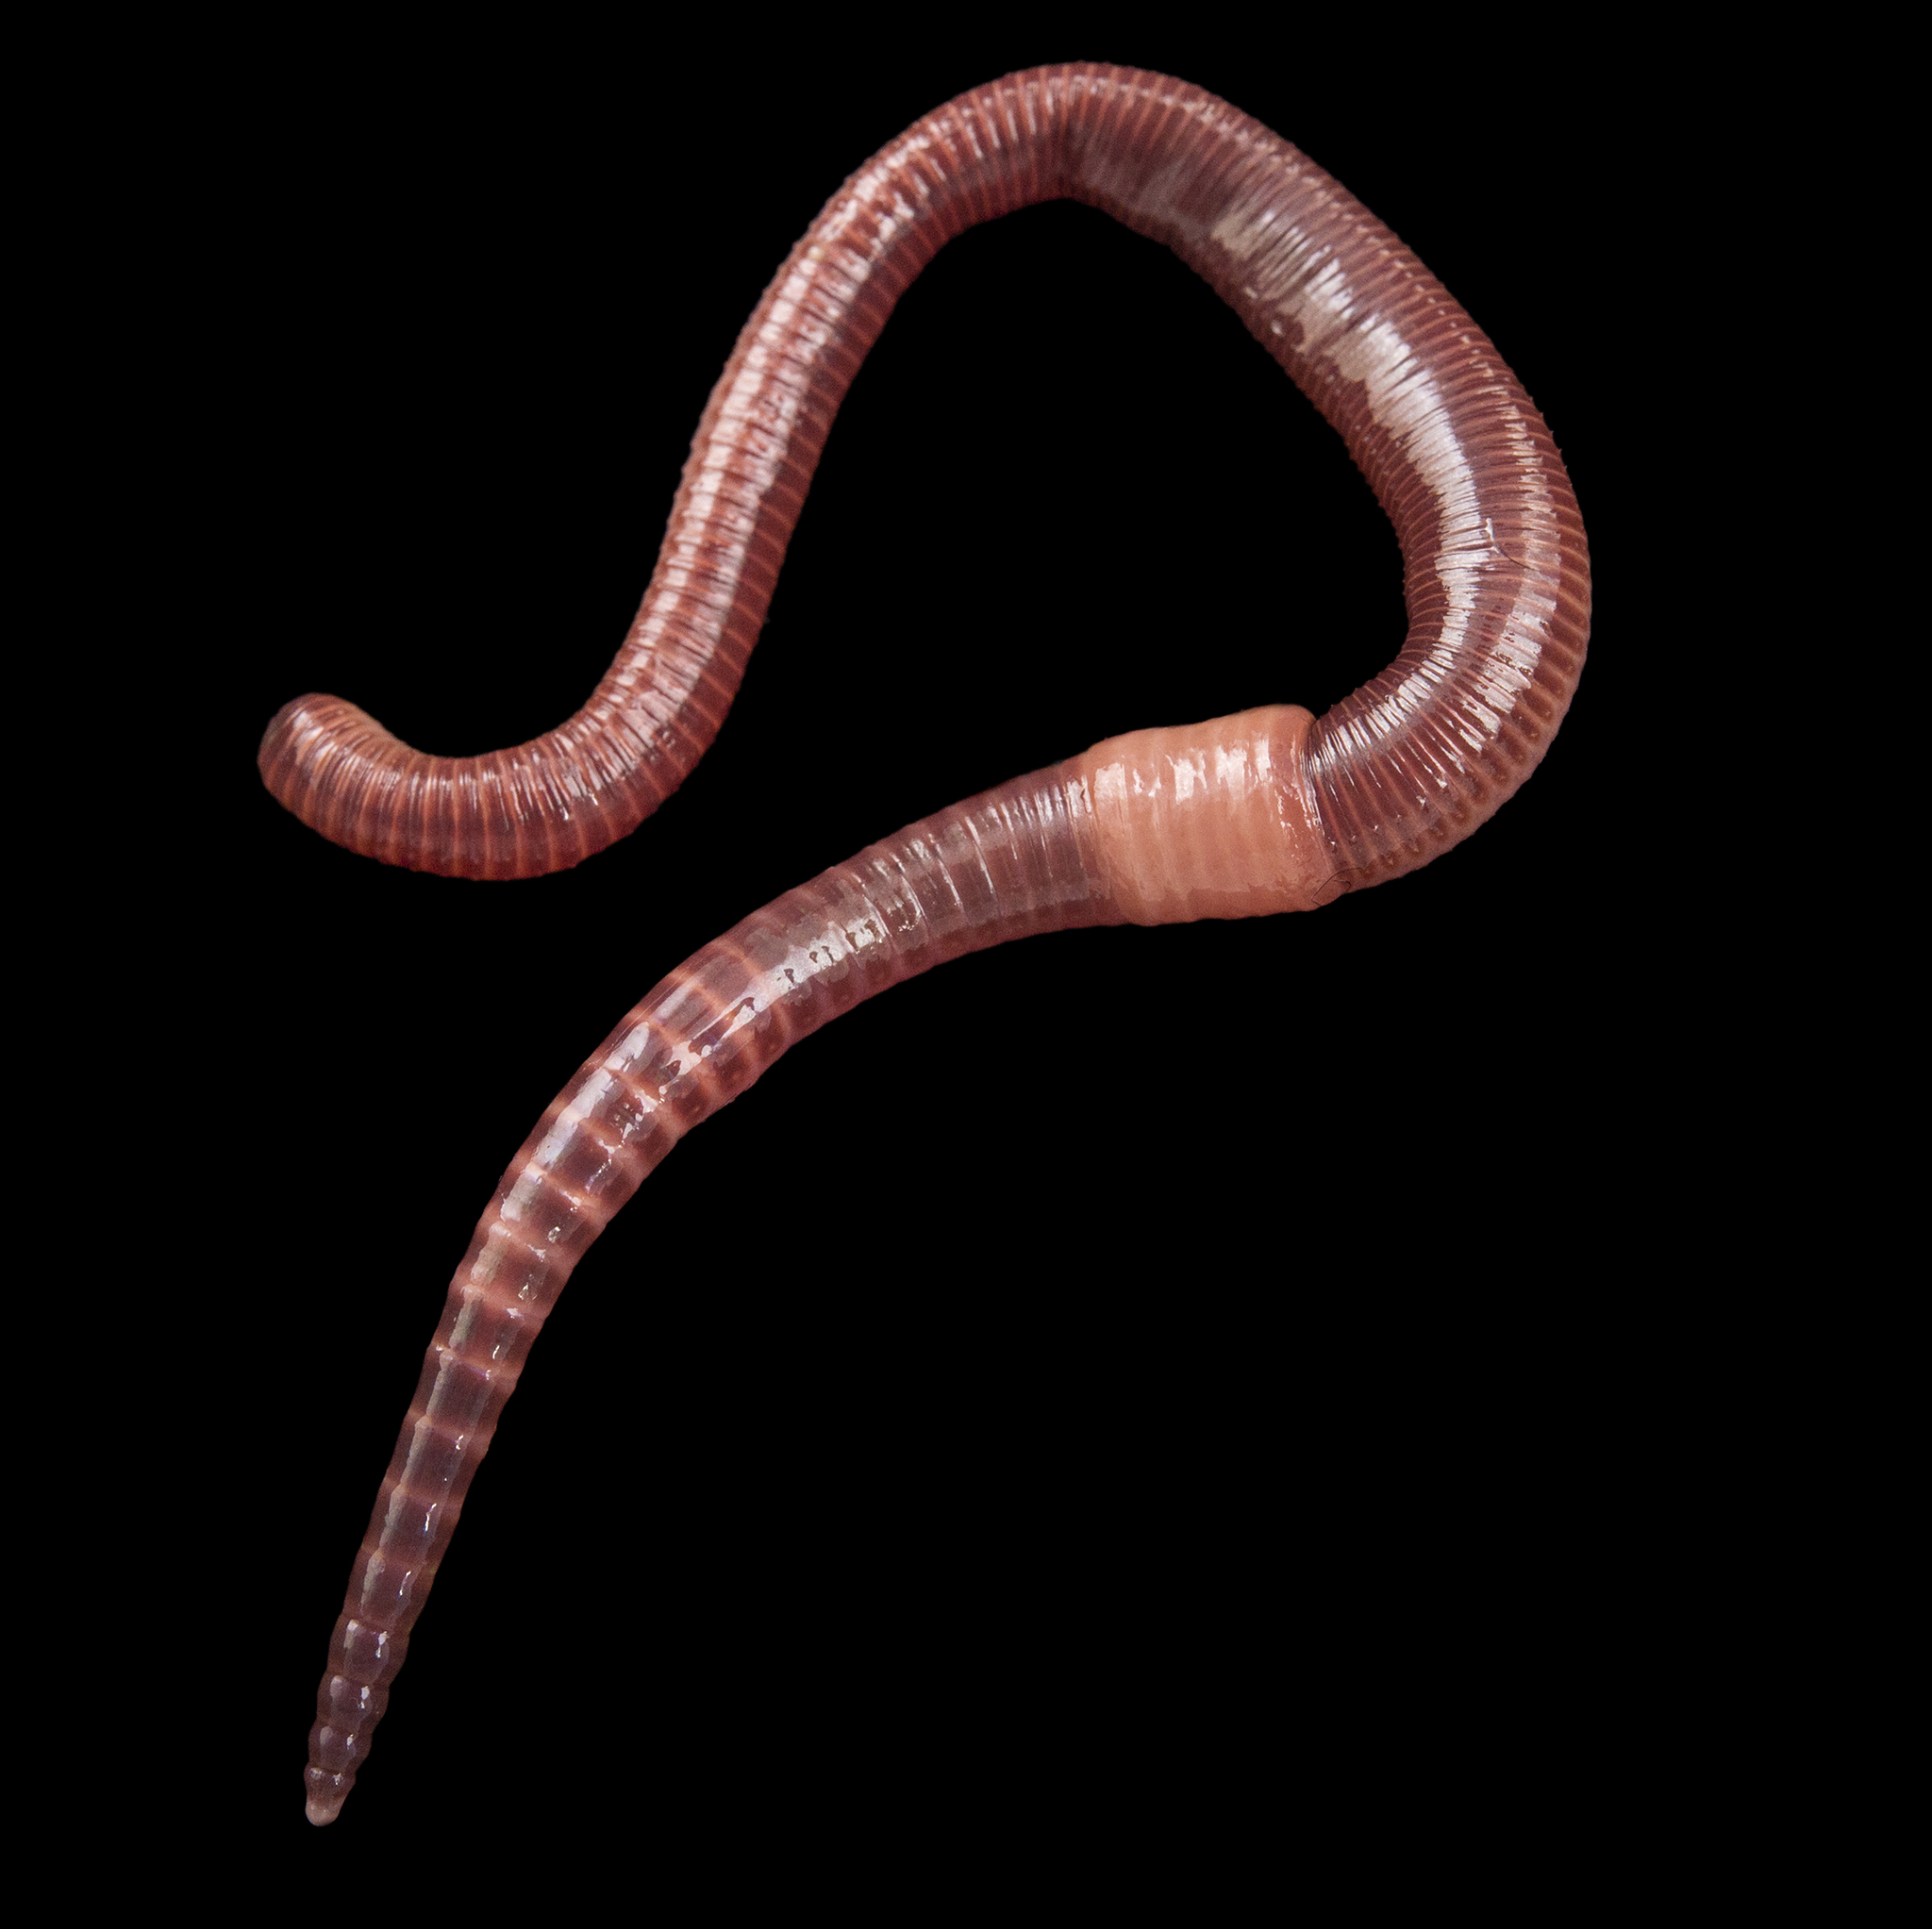 Earthworm | National Geographic